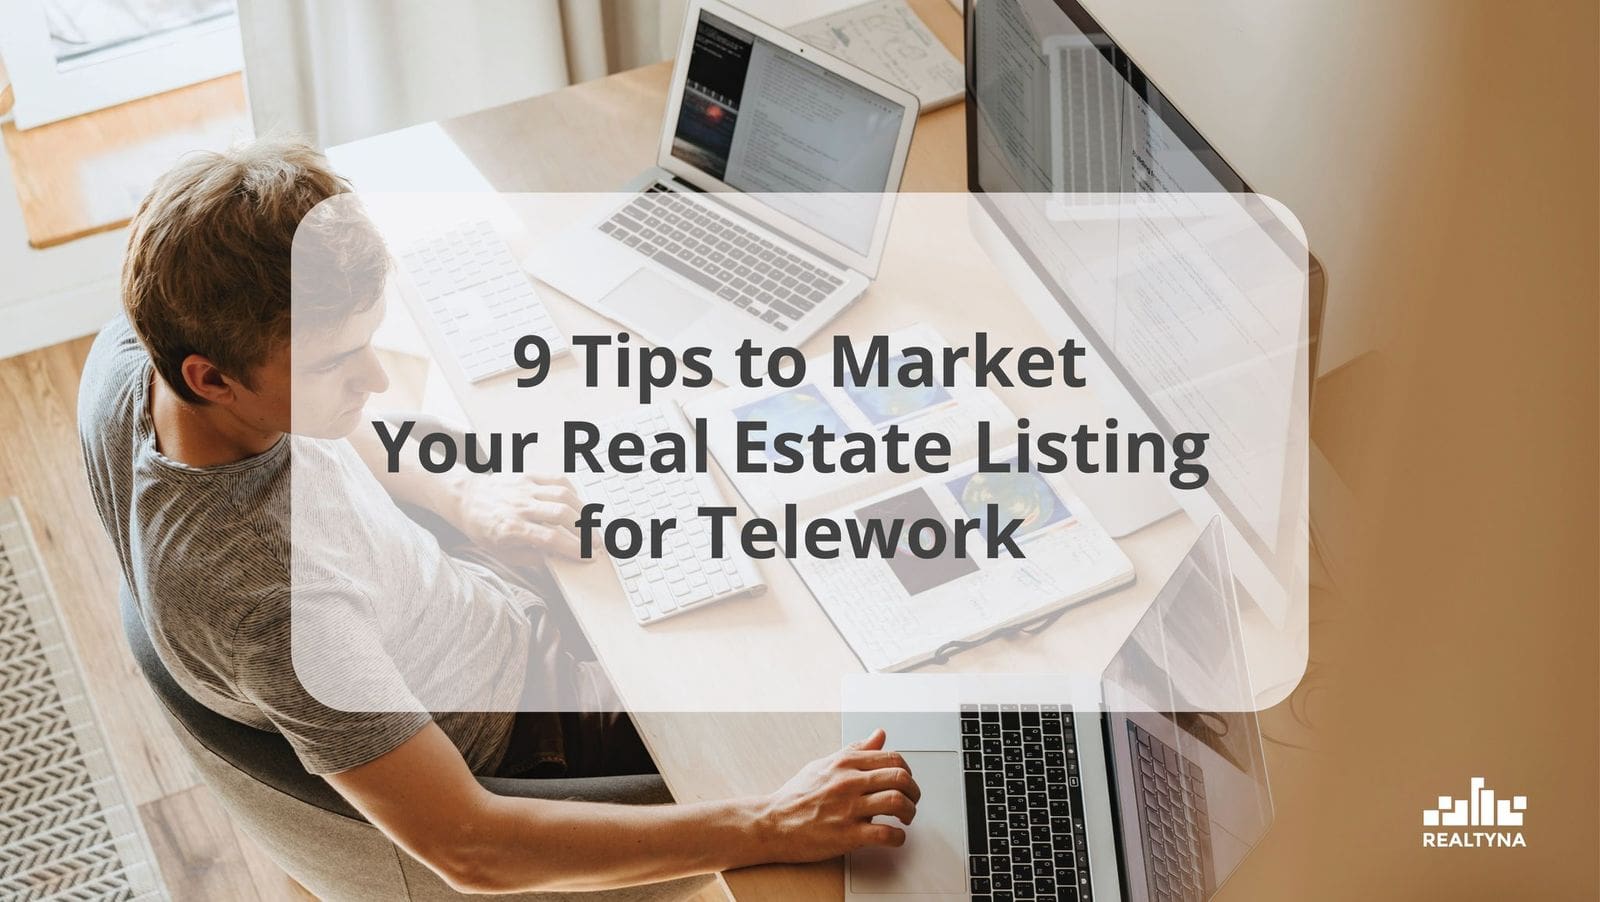 realtyna market real estate listing telework 1